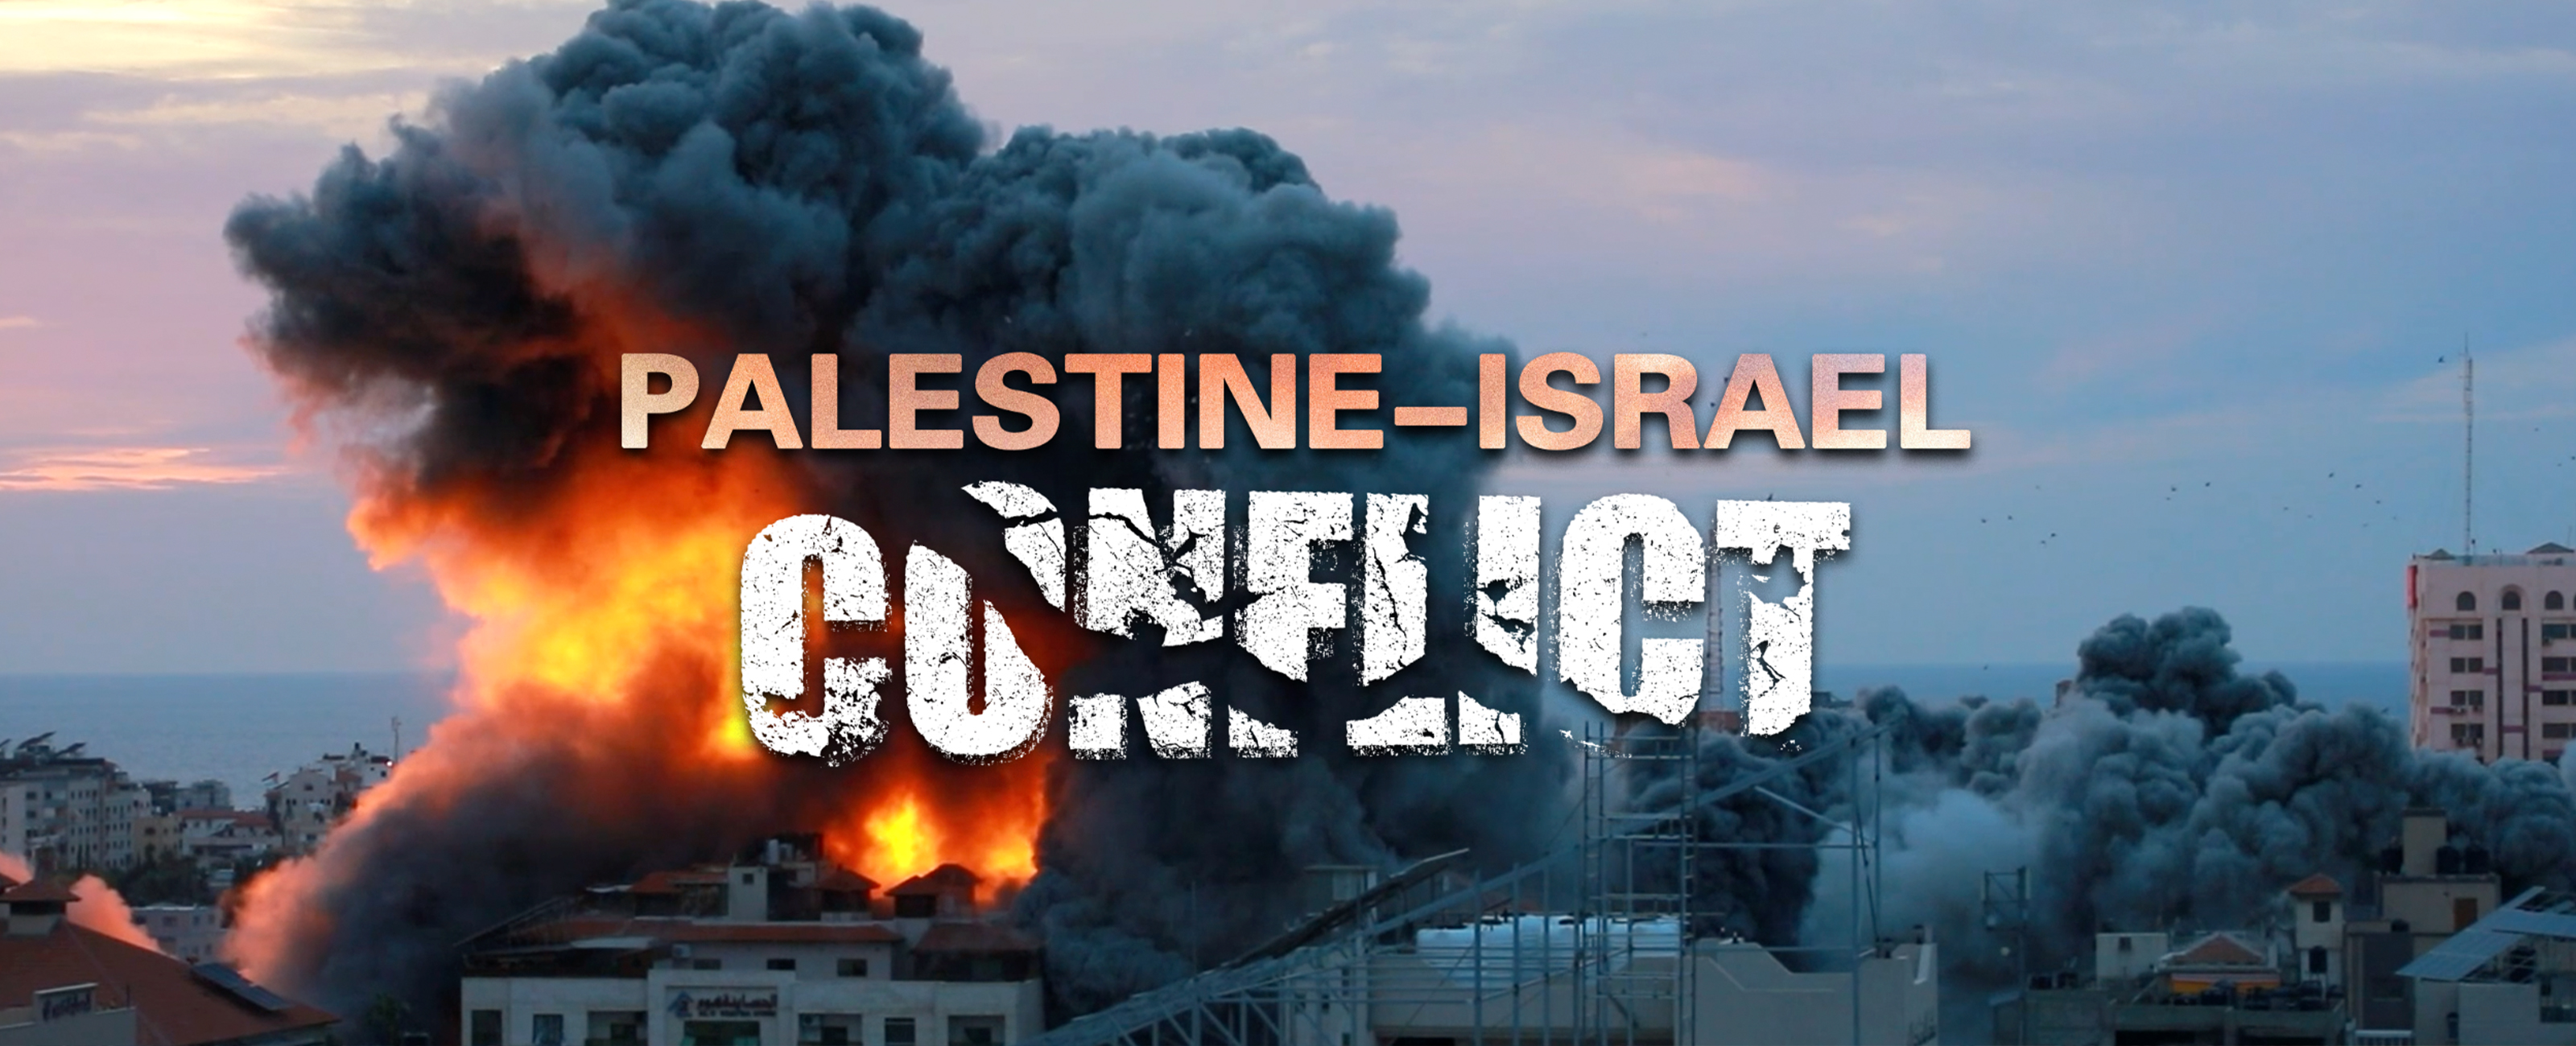 Palestine-Israel conflict